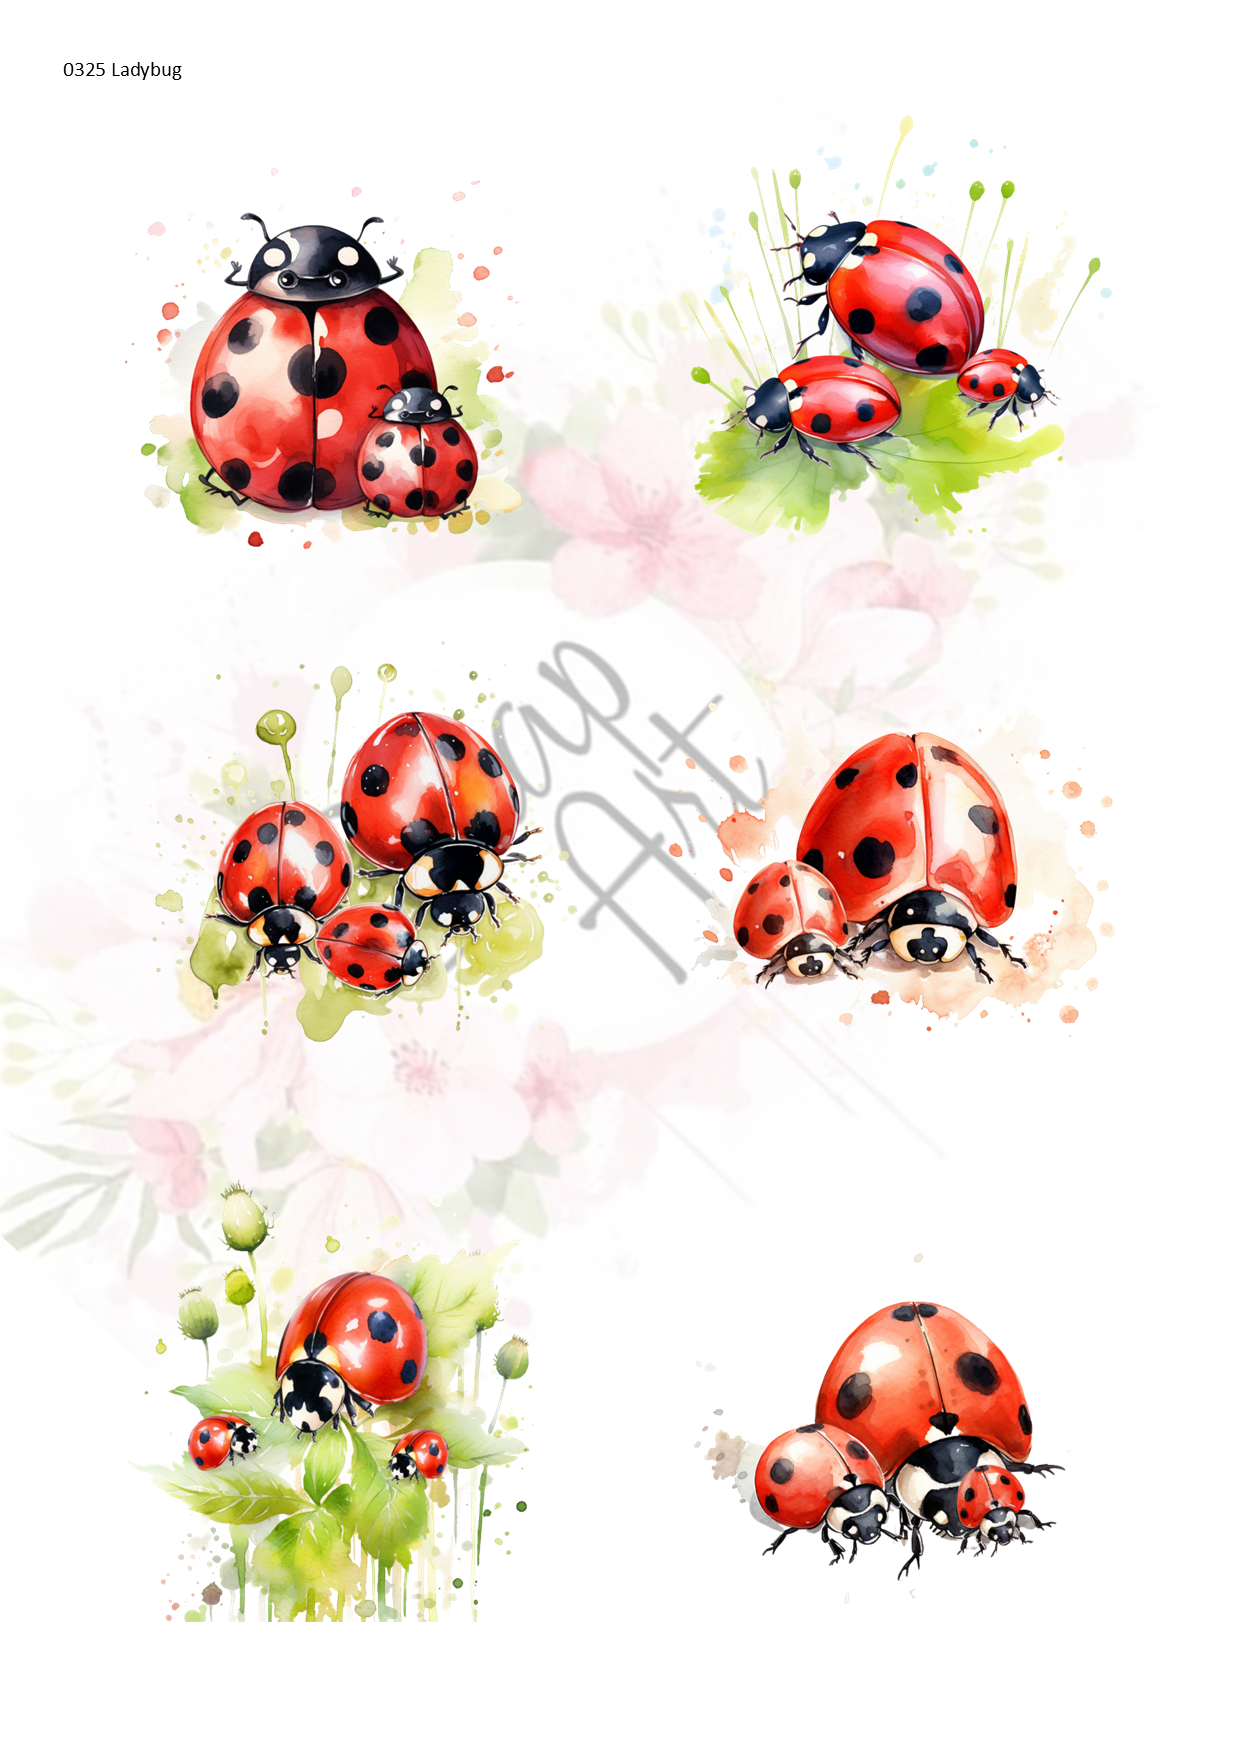 0325 Ladybug